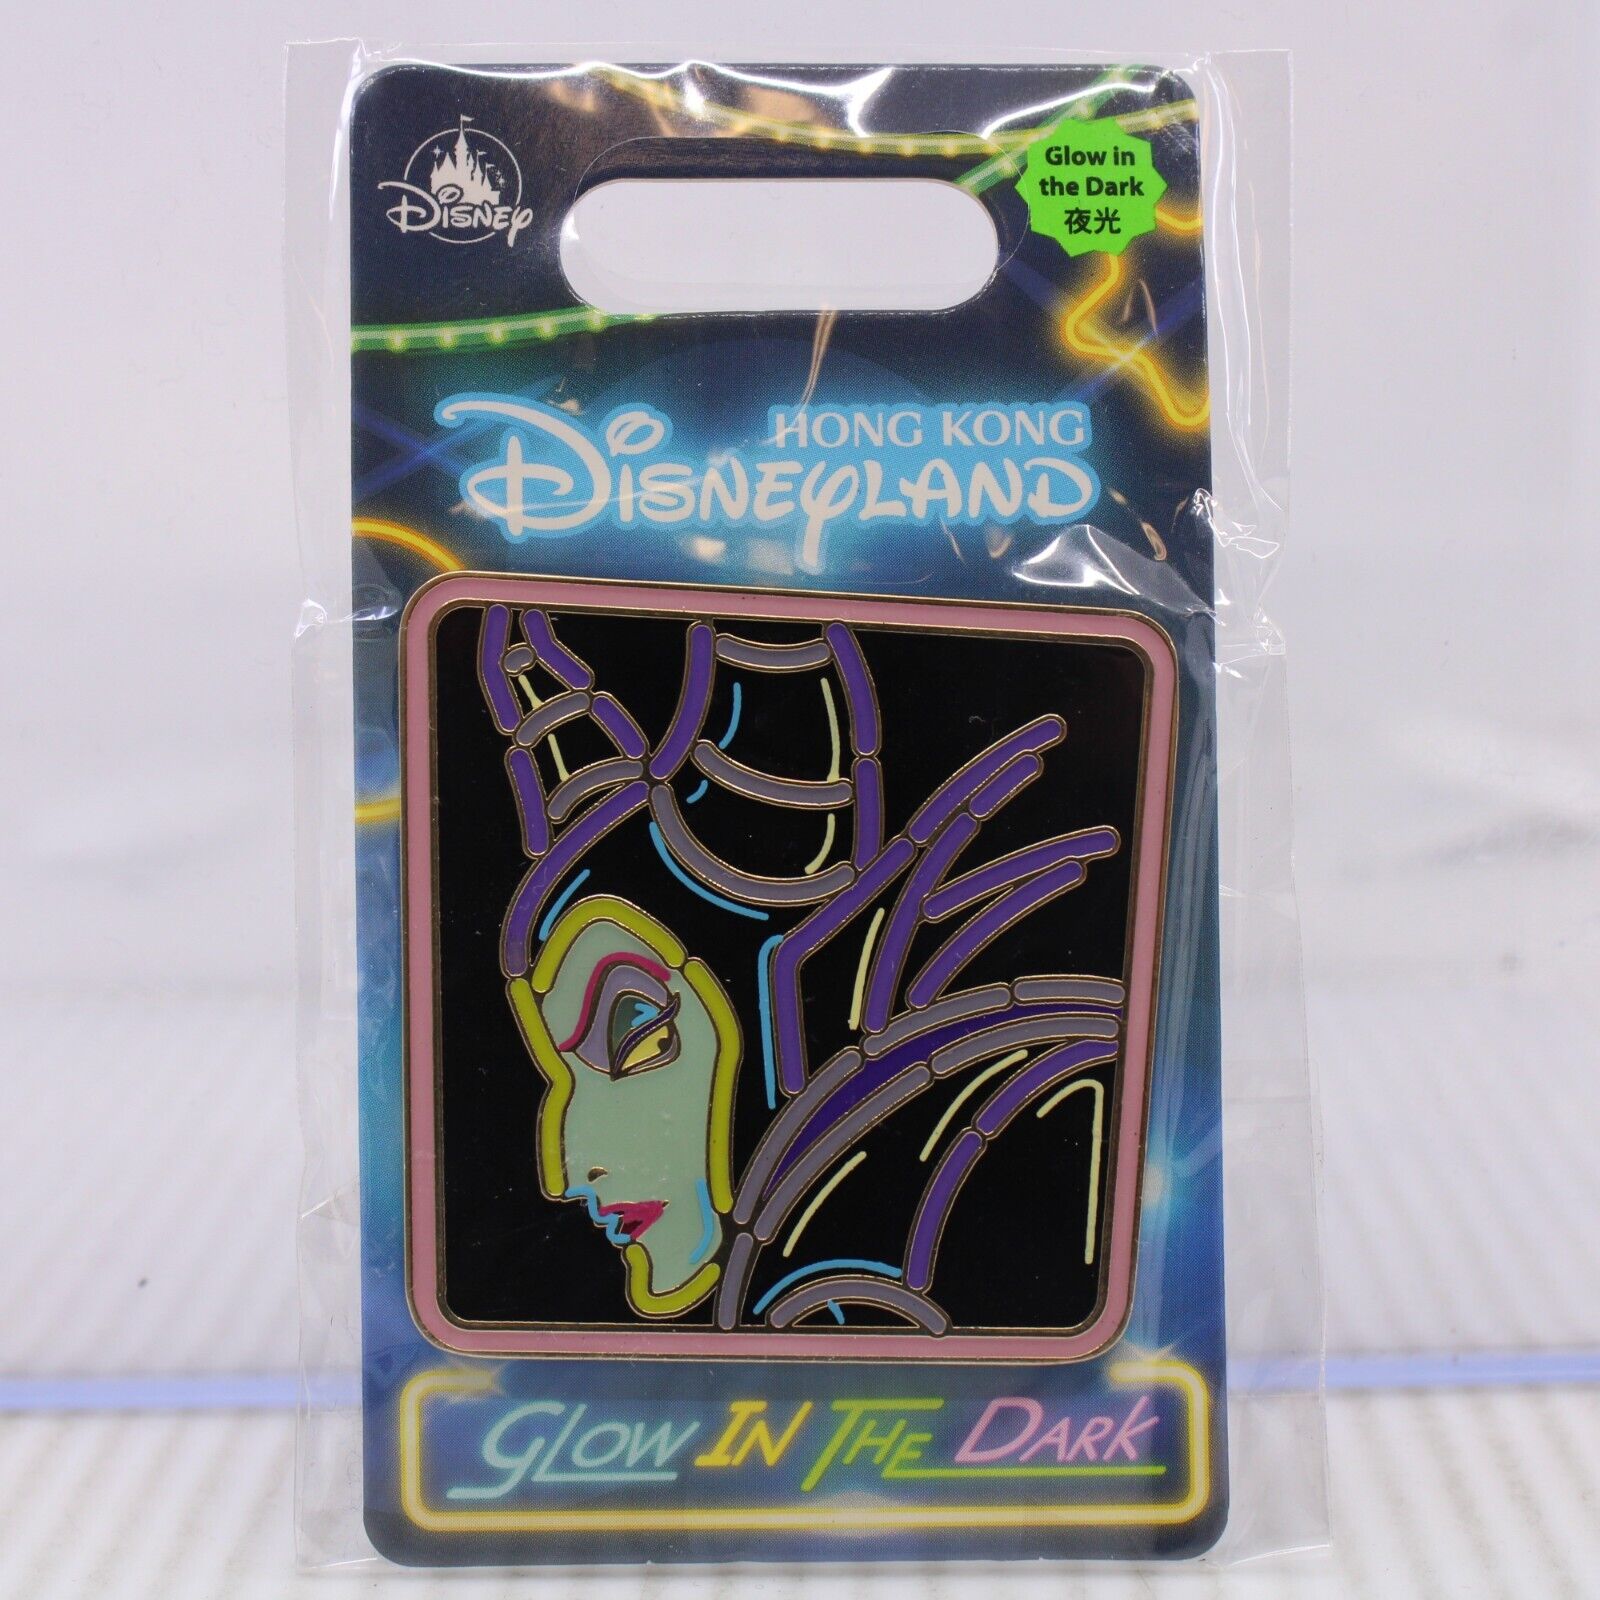 A4 Disney HKDL Hong Kong Disneyland Pin Villains Maleficent Glow in the Dark